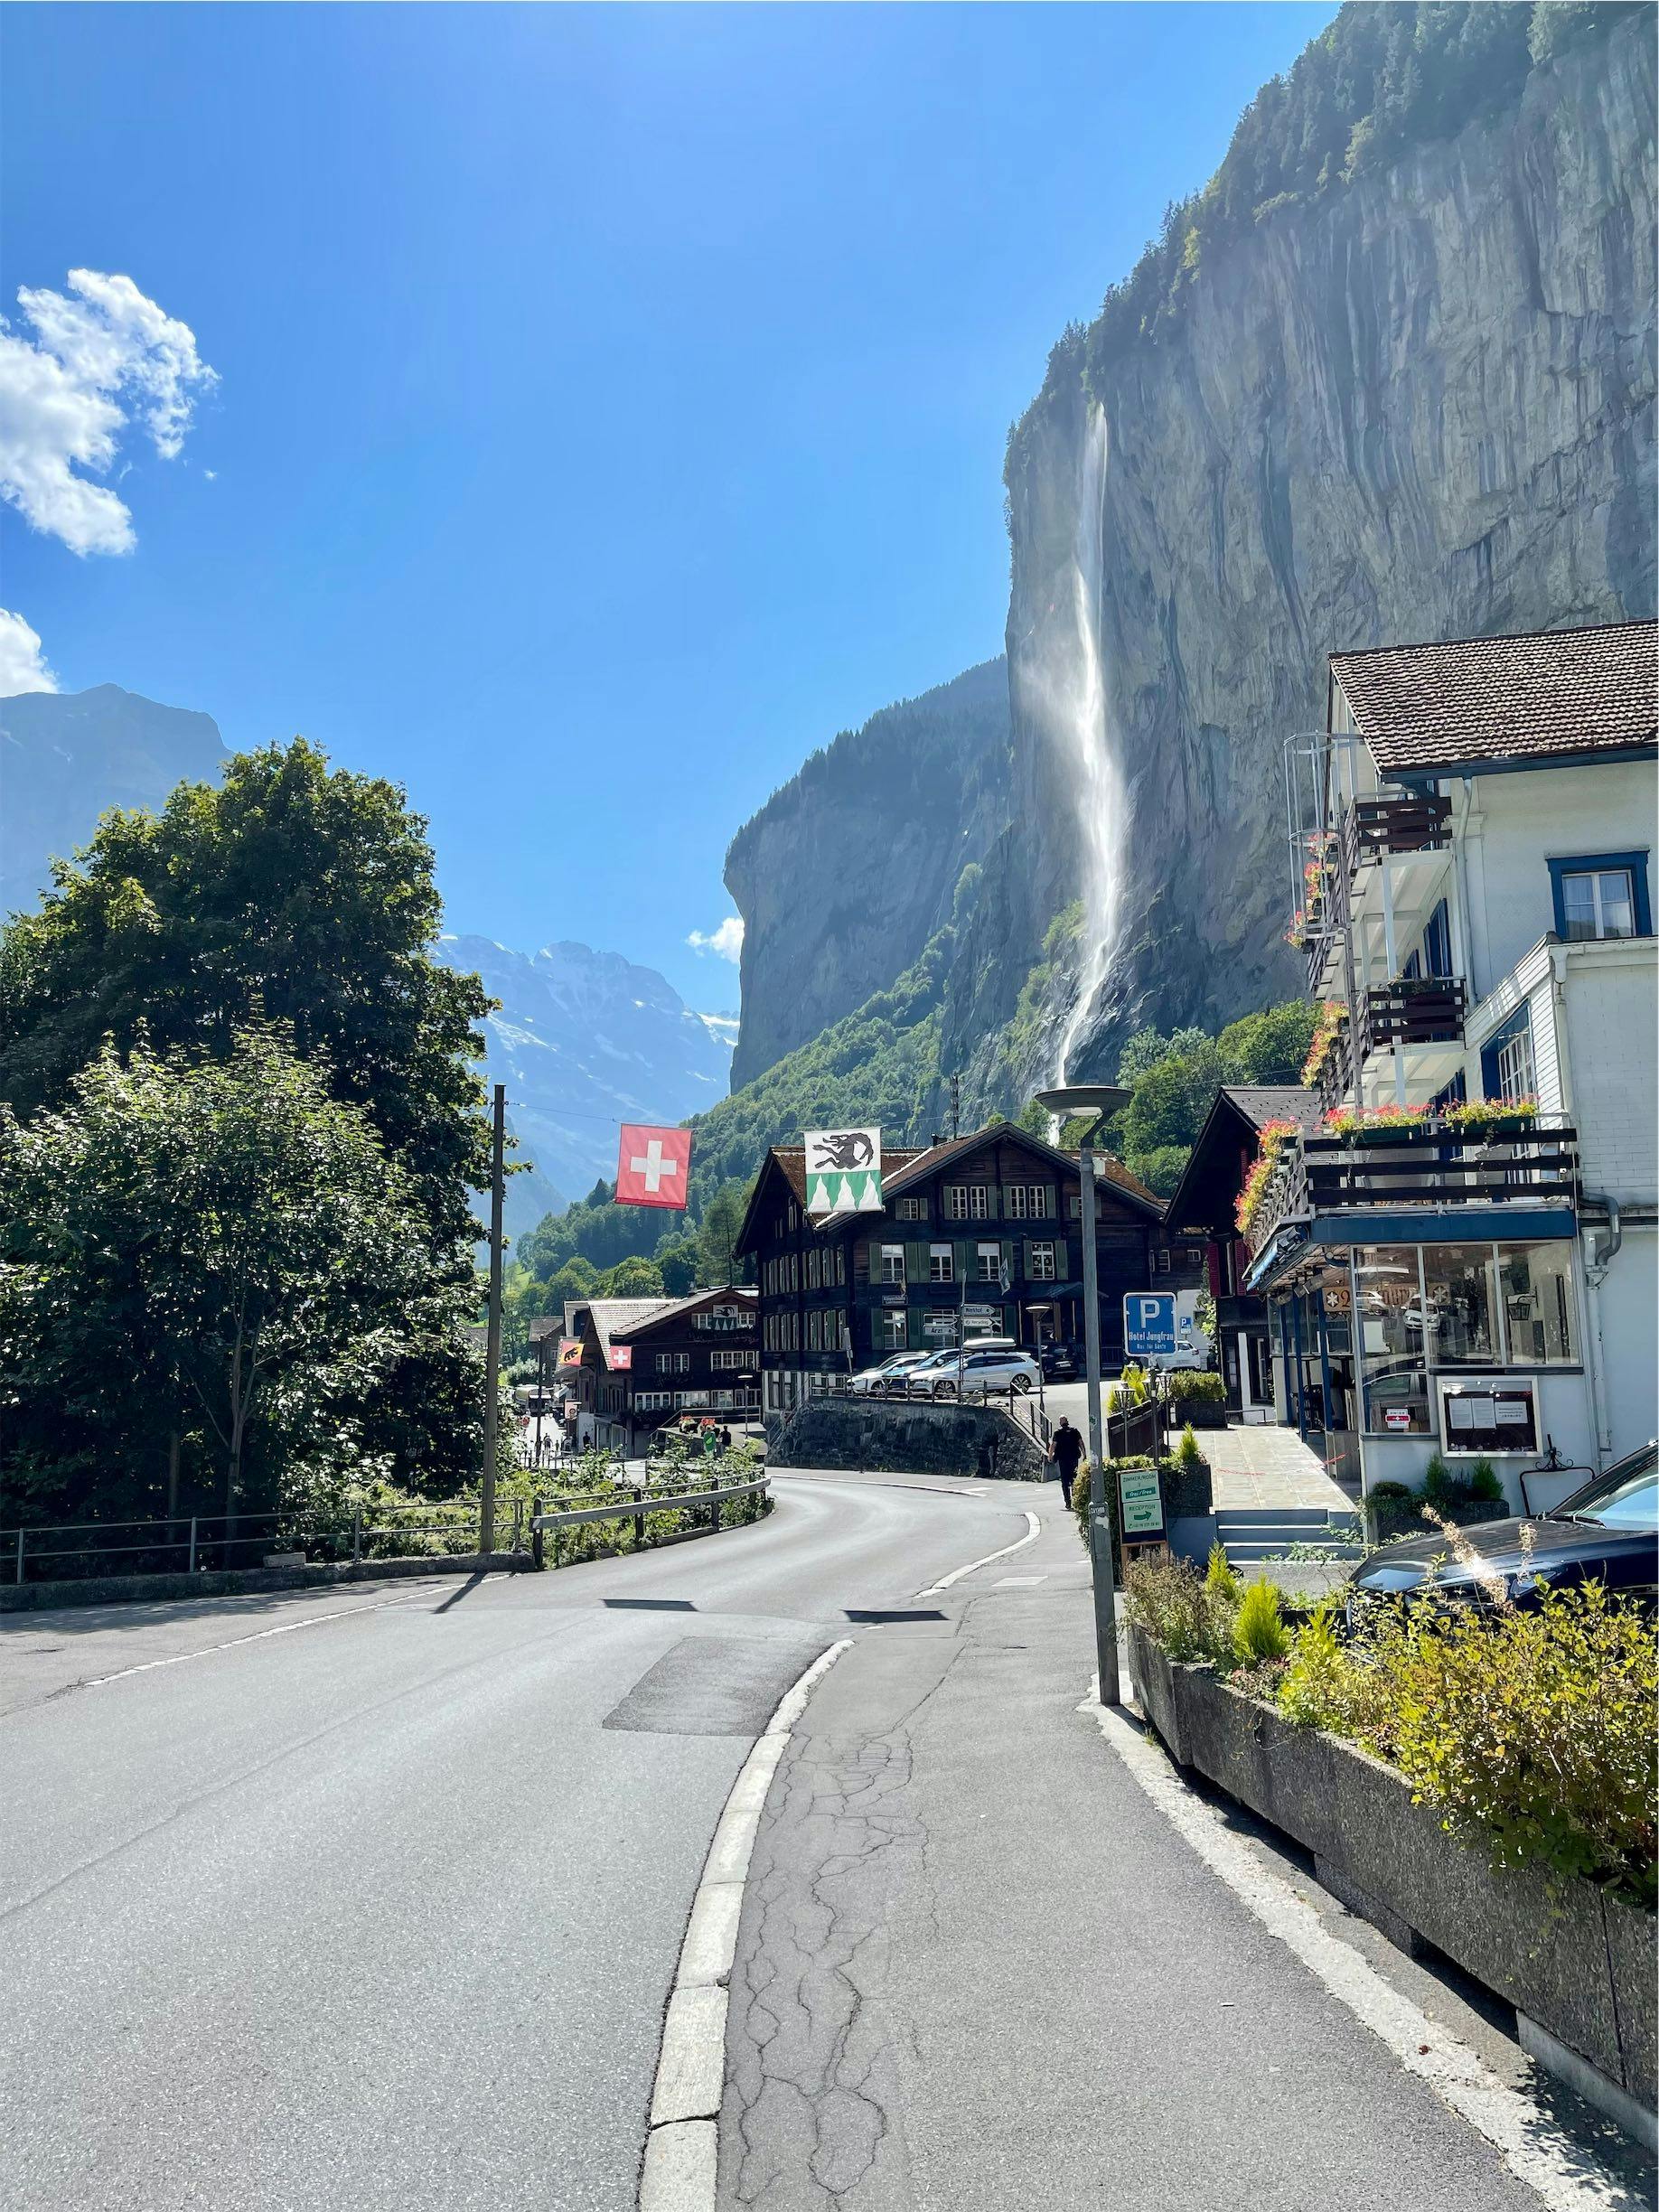 Picture taken in Lauterbrunnen, Switzerland